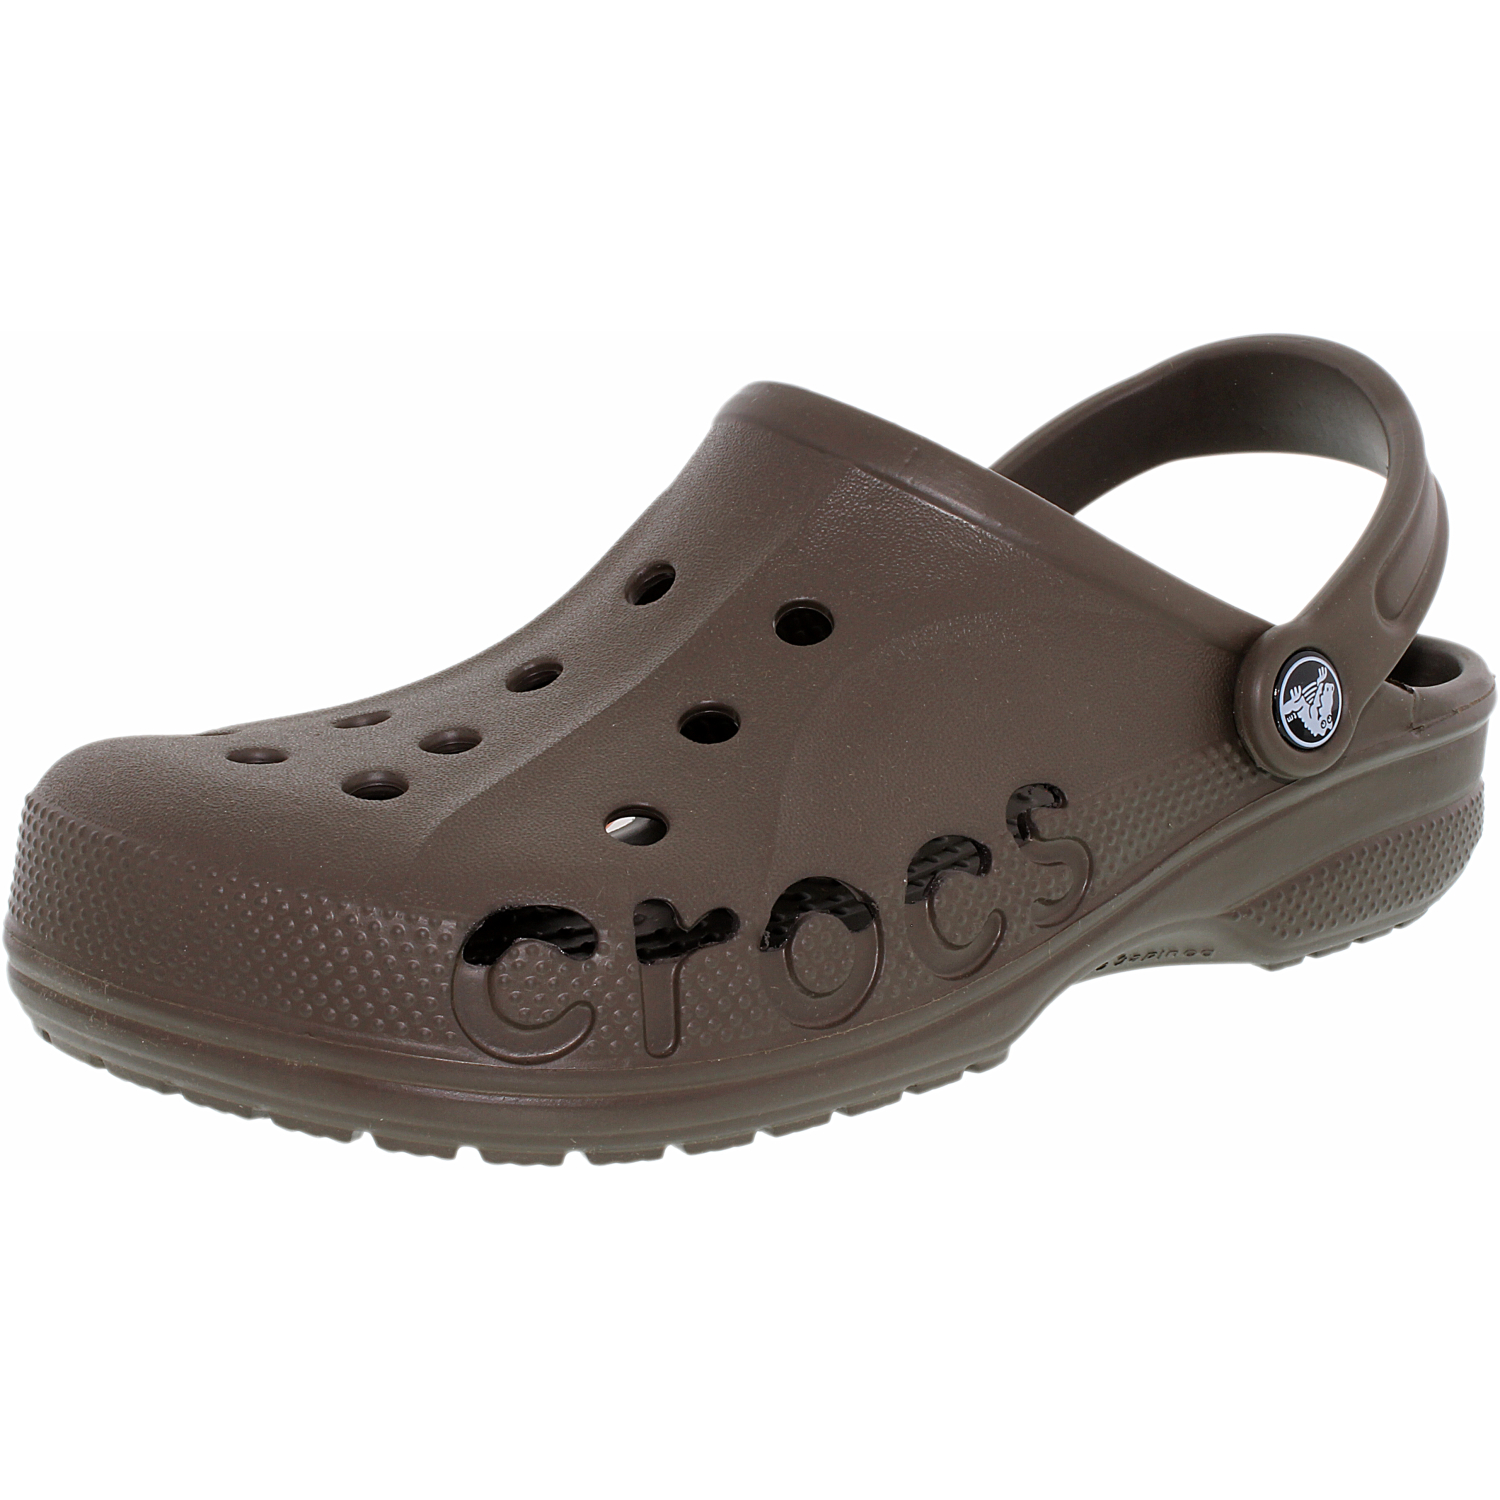 Crocs Men's 10126 Ankle-High Rubber Sandal